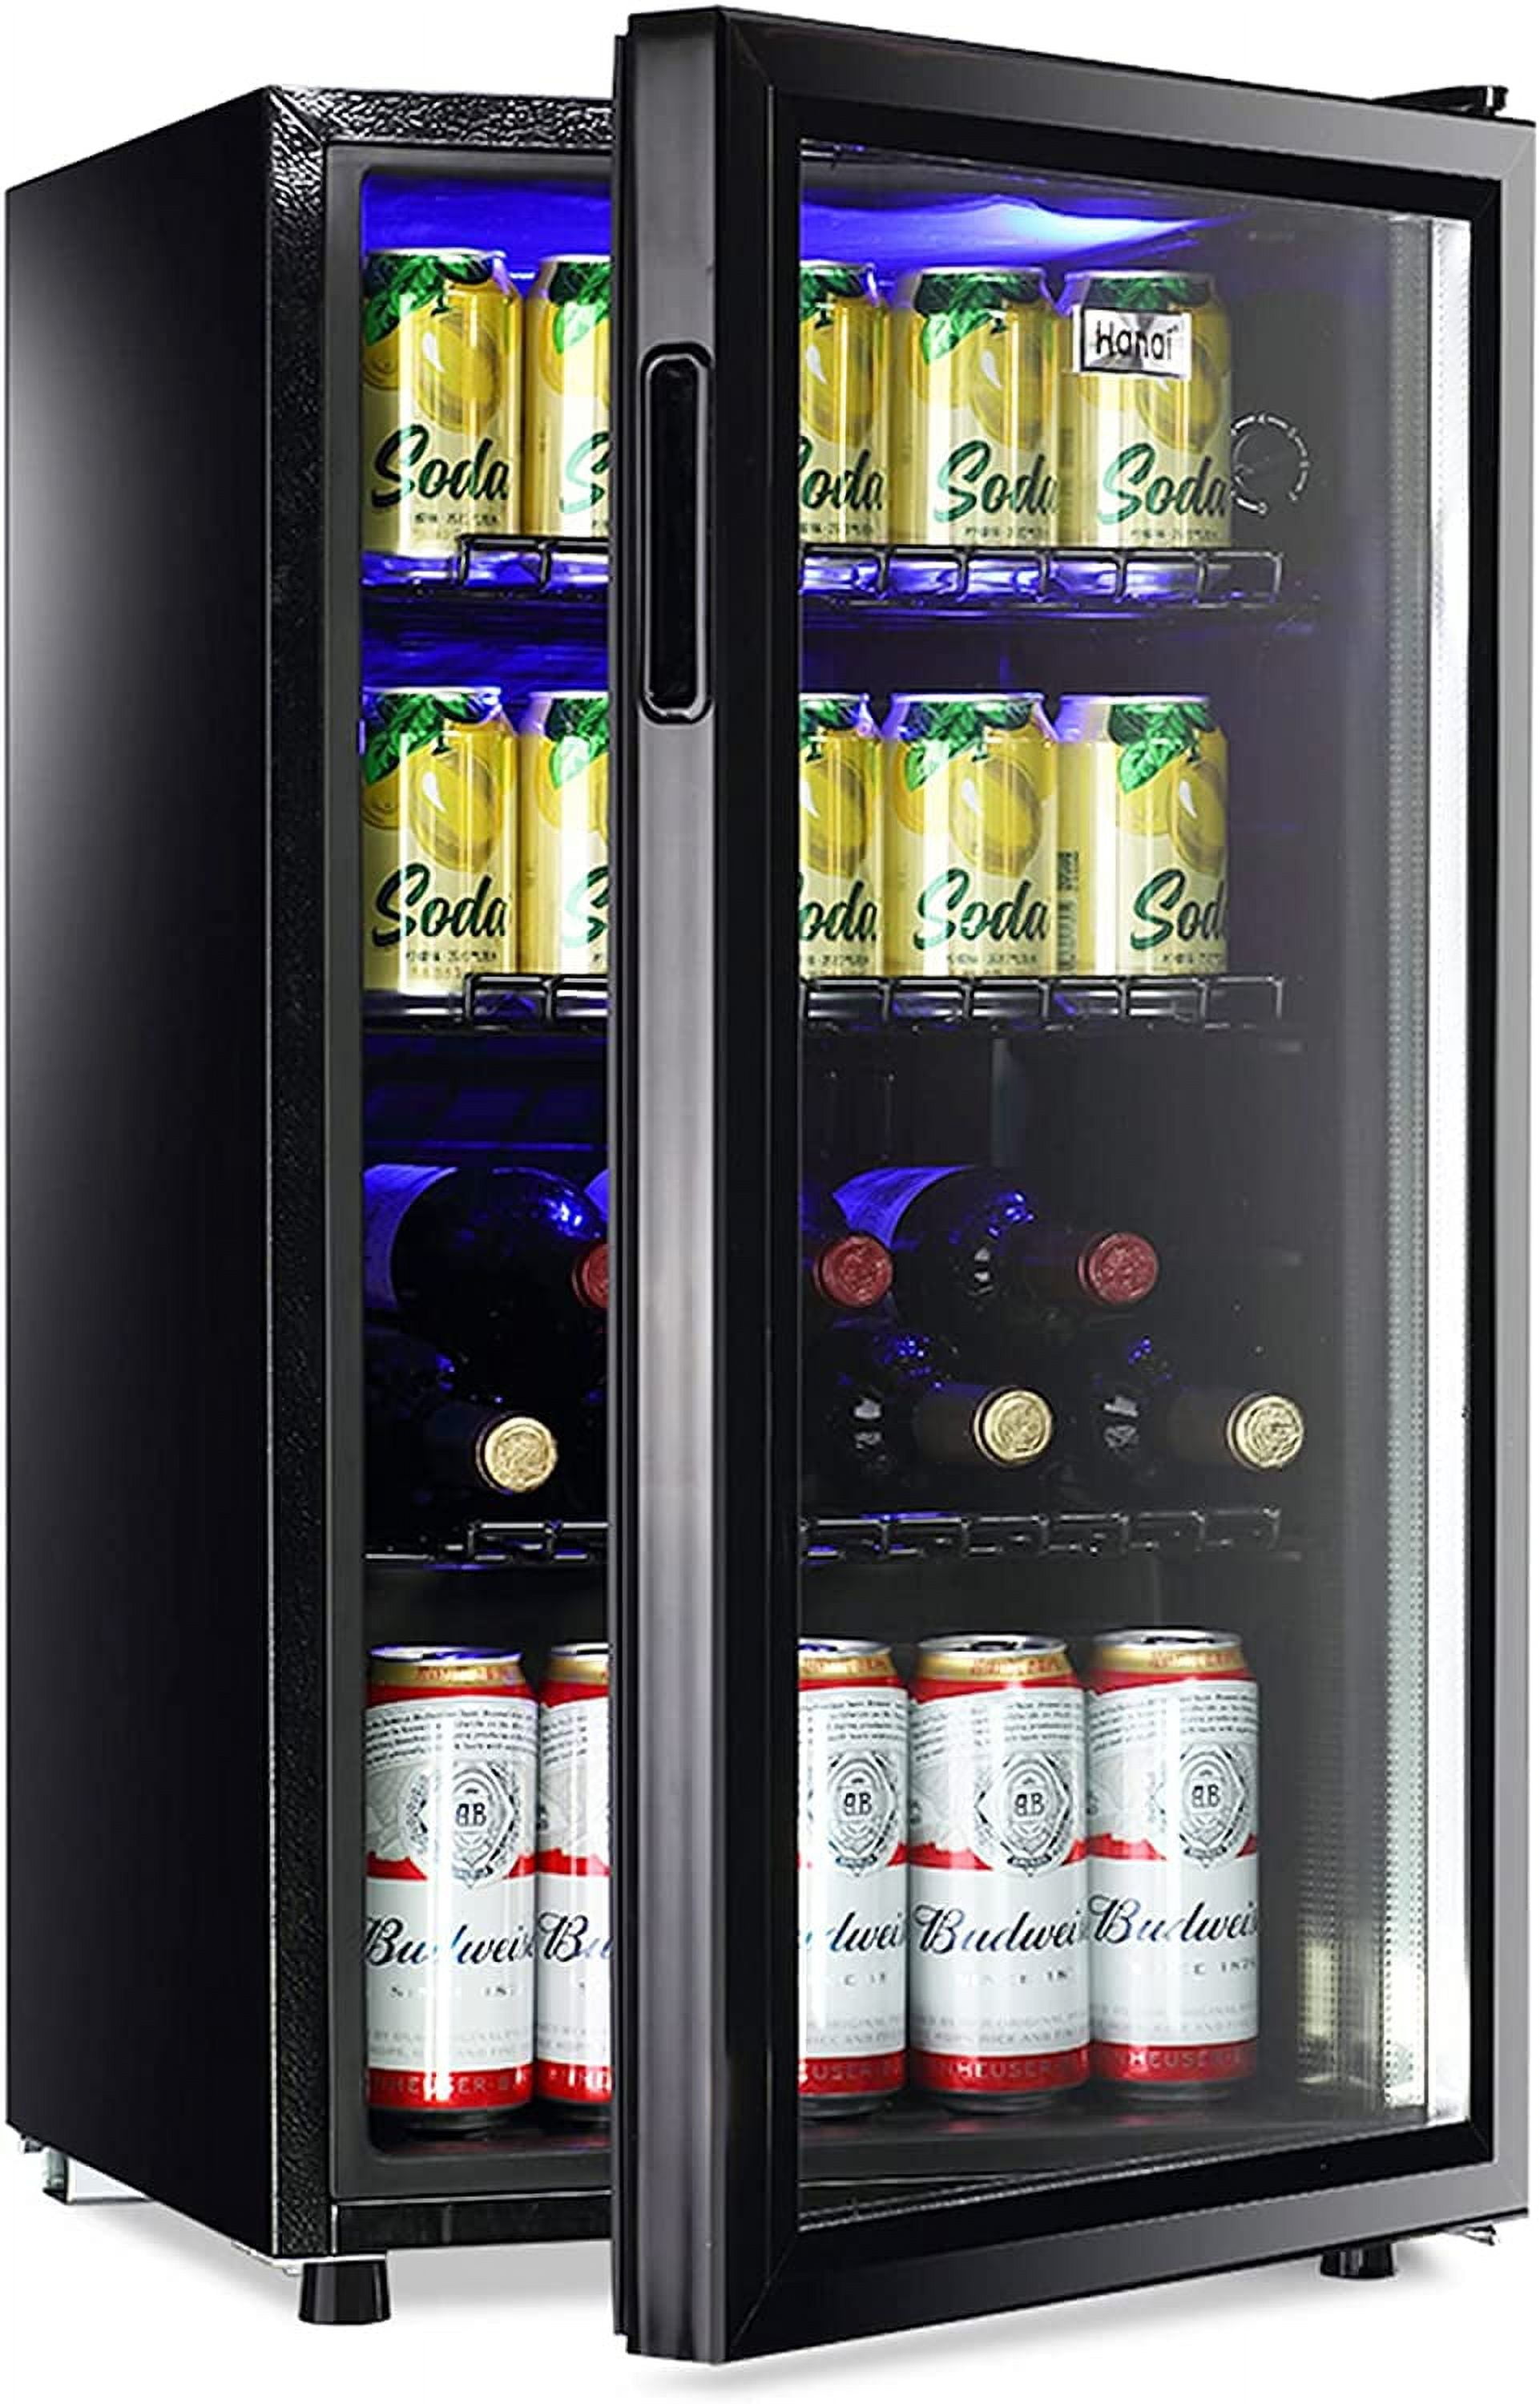 WANAI Beverage Refrigerator Cooler 60 Can Fridge Glass Door for Beer Drinks  Wines Juice, Adjustable Shelves Blue LED Lights and User Friendly